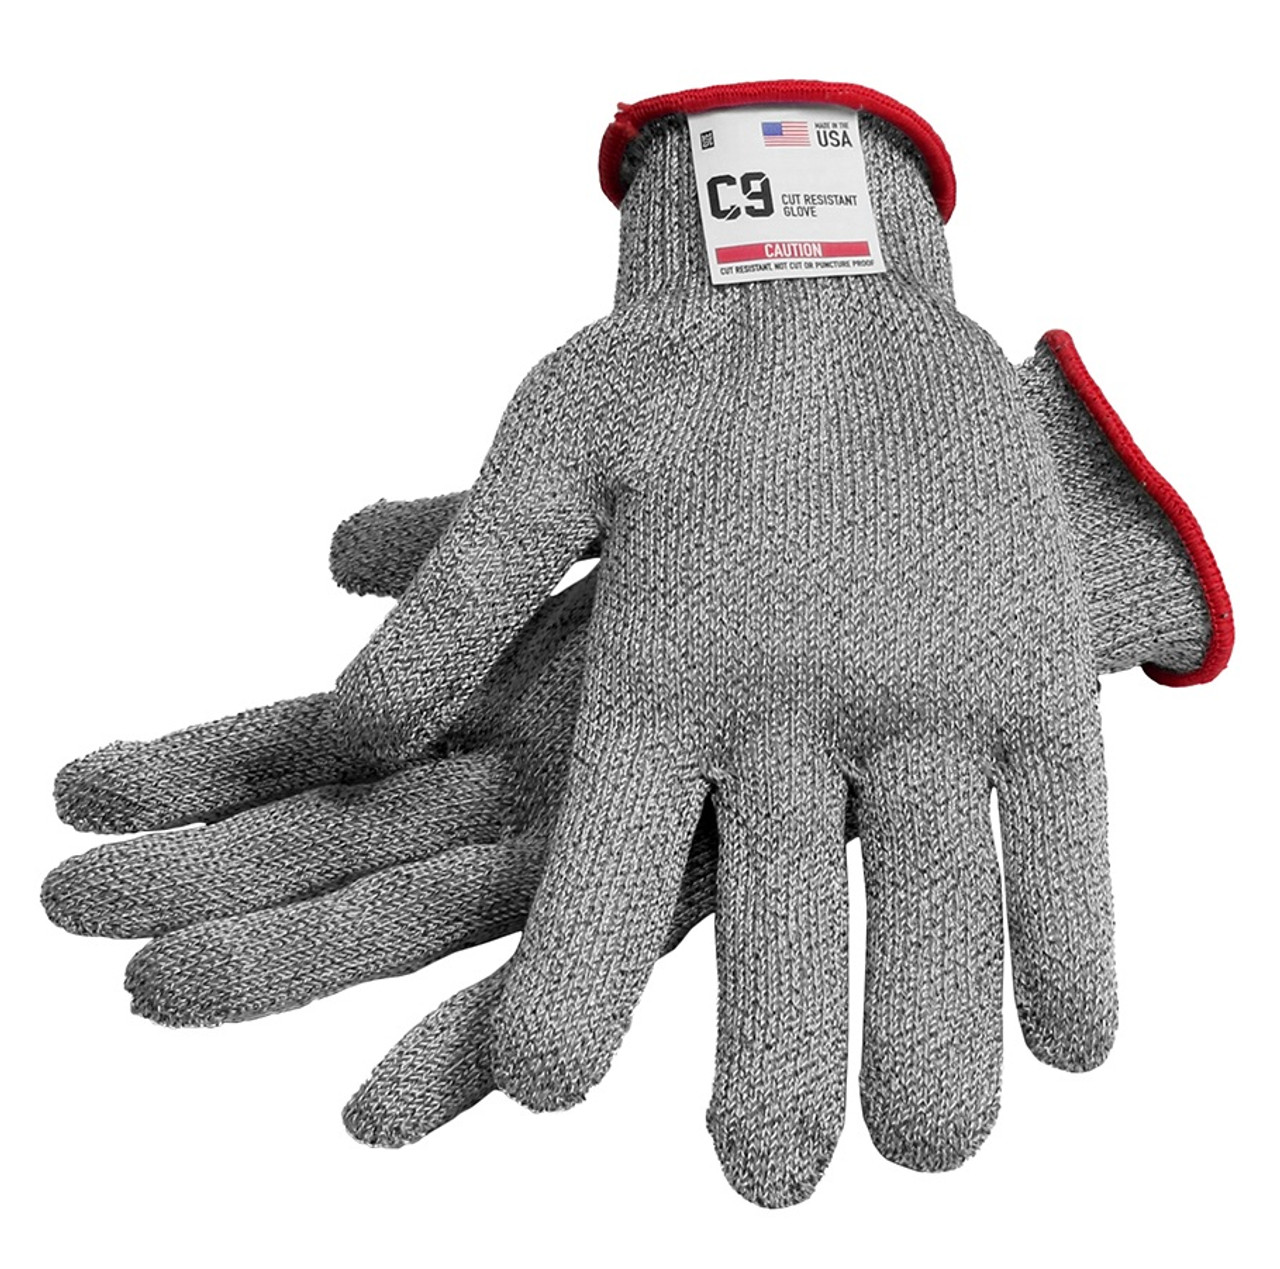 Gps Safety Cut Glove (Xsmall - Red Cuff), Model# 3020